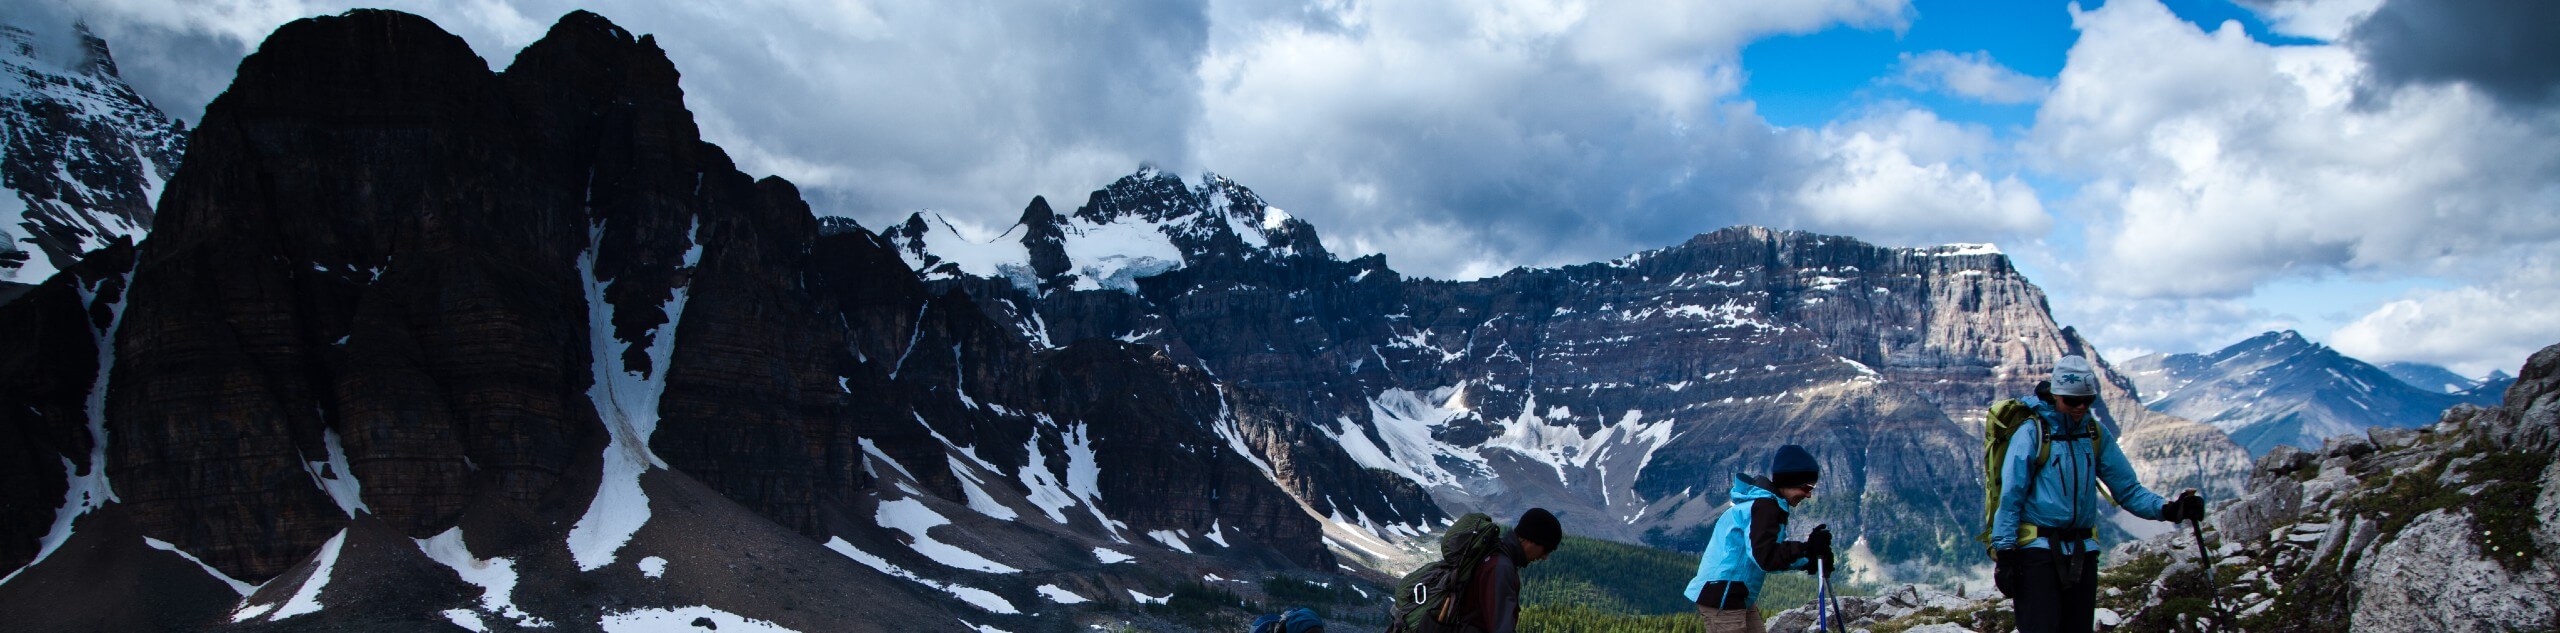 Backpacking near Mount Assiniboine